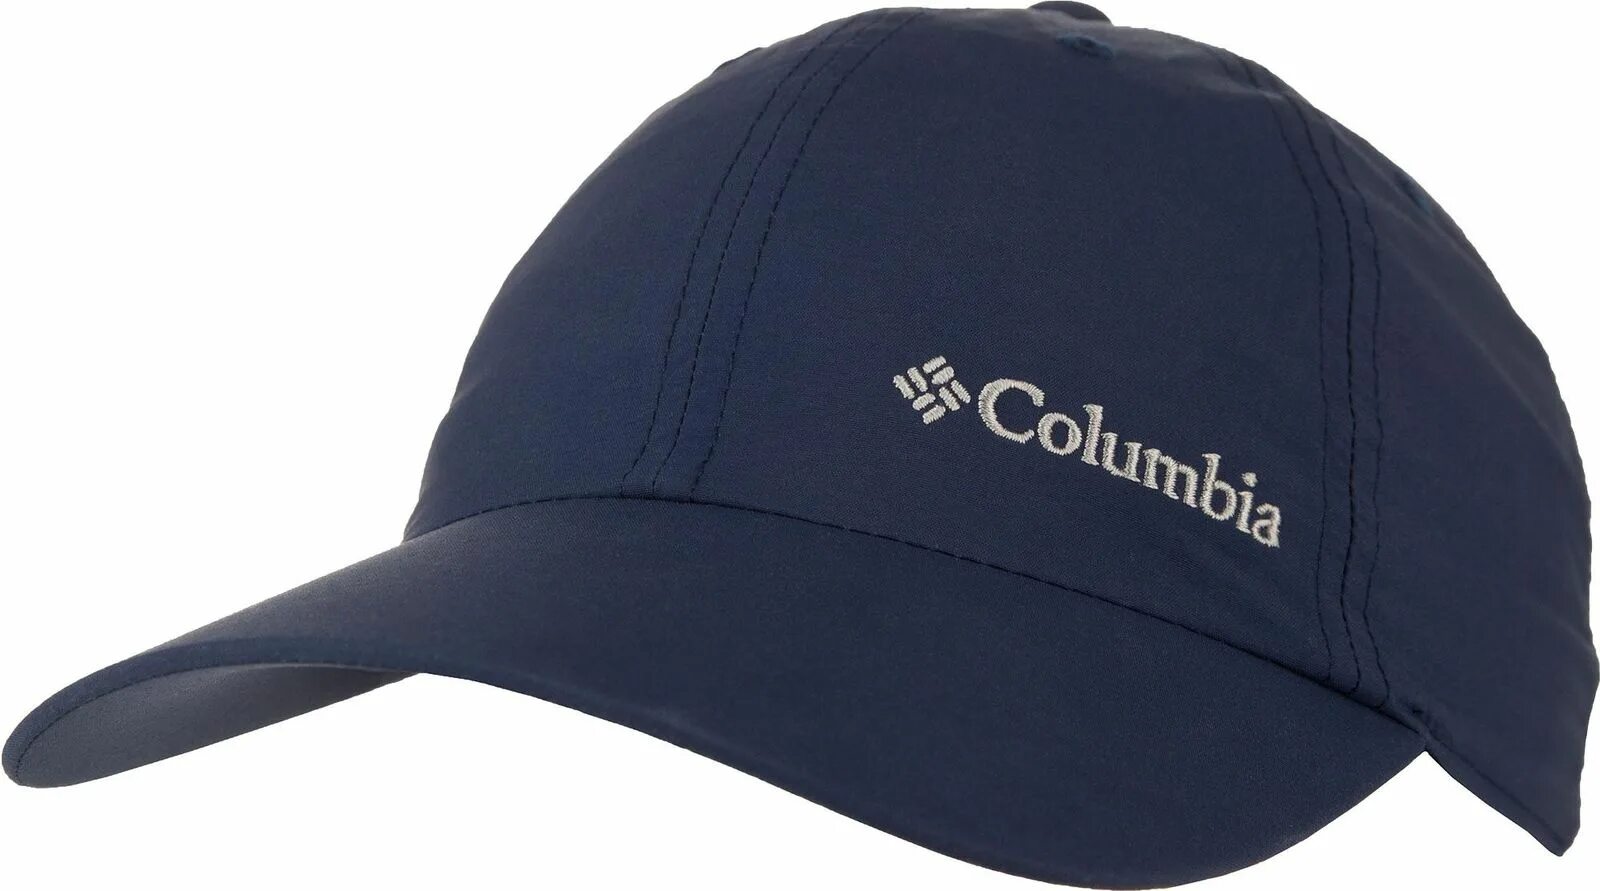 Кепка коламбия Omni Shade. Бейсболка летняя Columbia Tech Shade. Бейсболка Columbia Tech Shade II Ball cap. Бейсболка коламбия синяя. Спортмастер бейсболки мужские